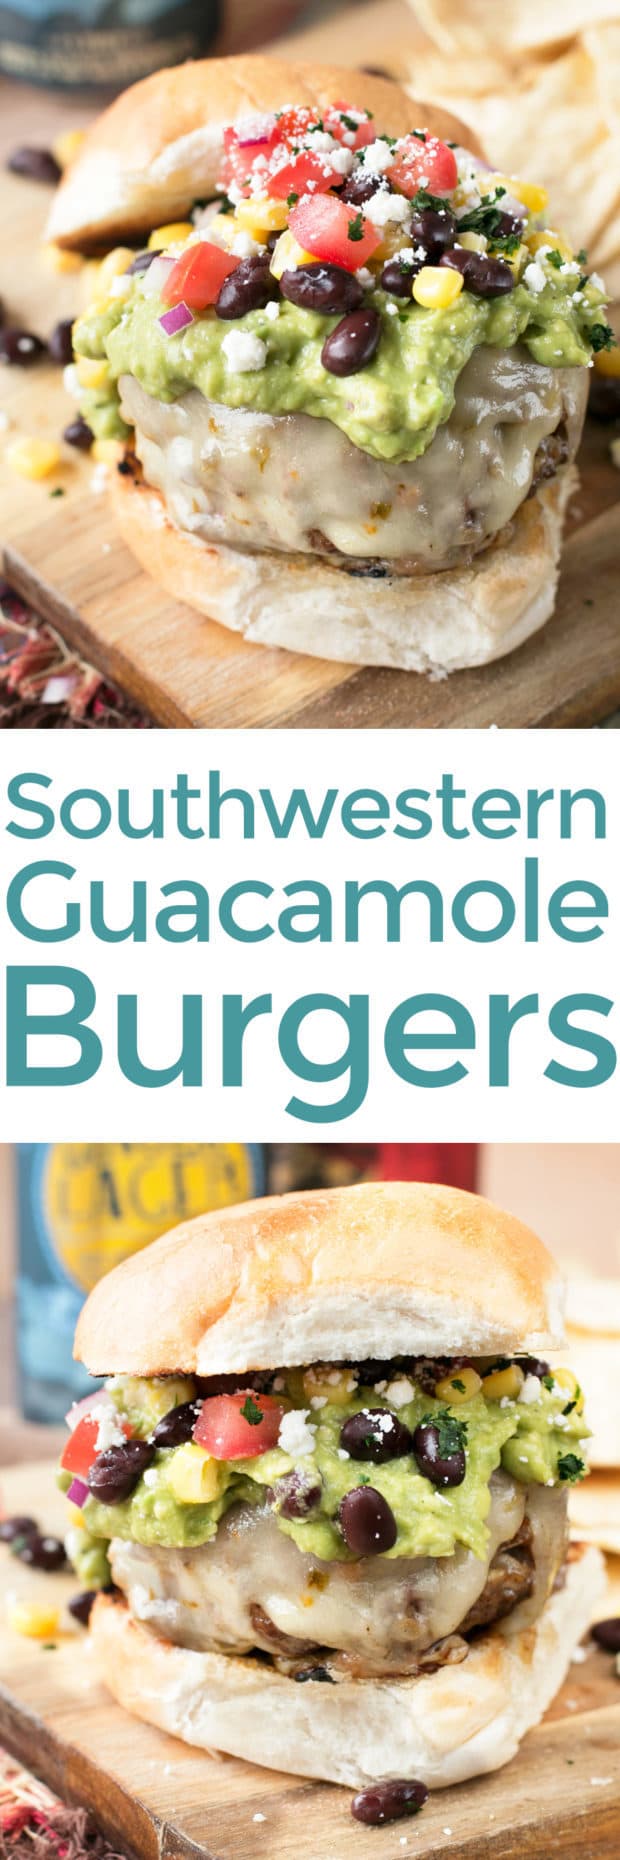 Southwestern Guacamole Burger | cakenknife.com #grilling #burgers #avocado